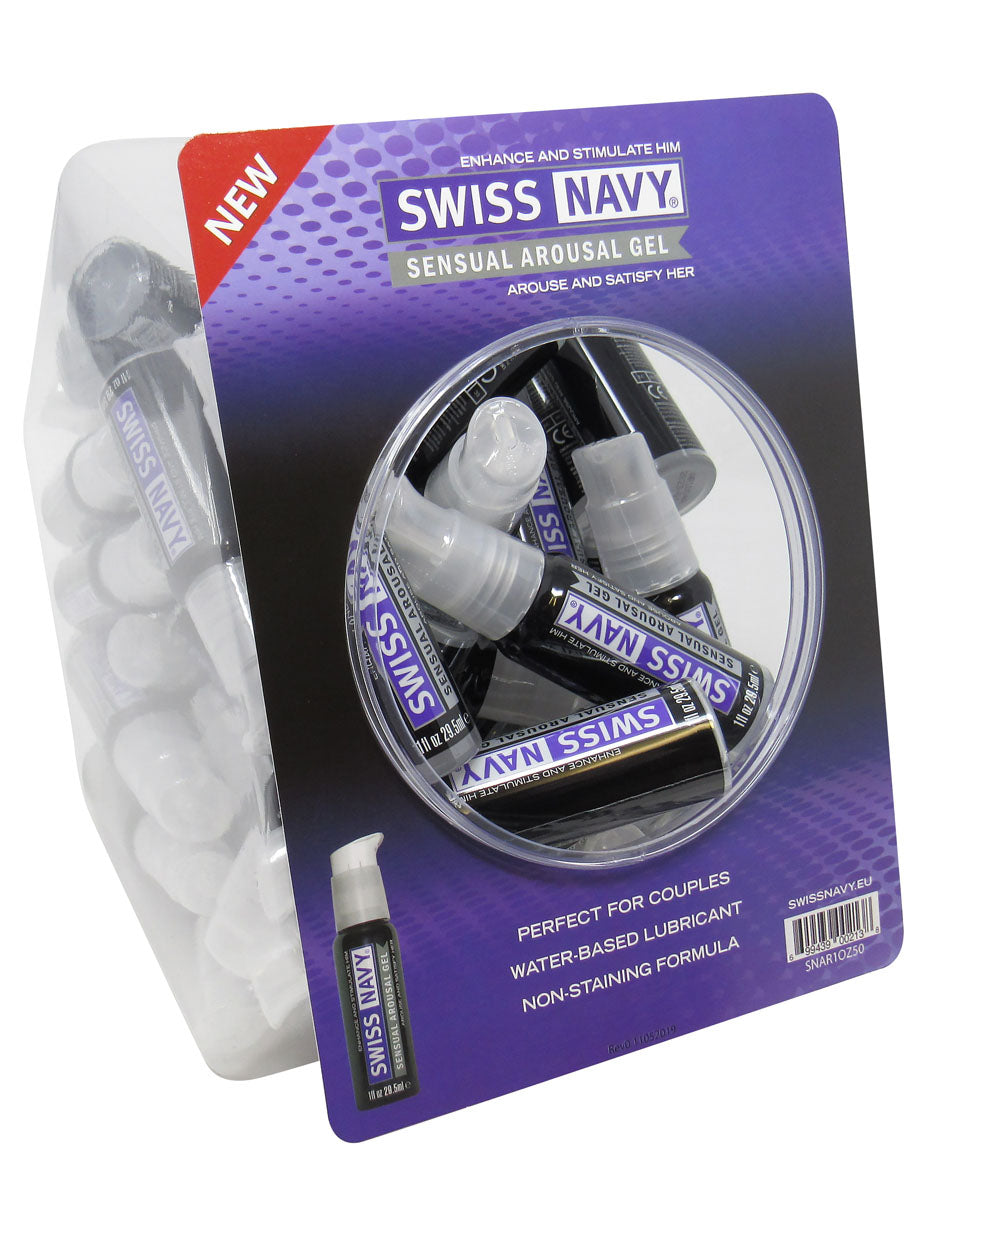 Swiss Navy Sensual Arousal Lubricant 1oz 50pc Fishbowl